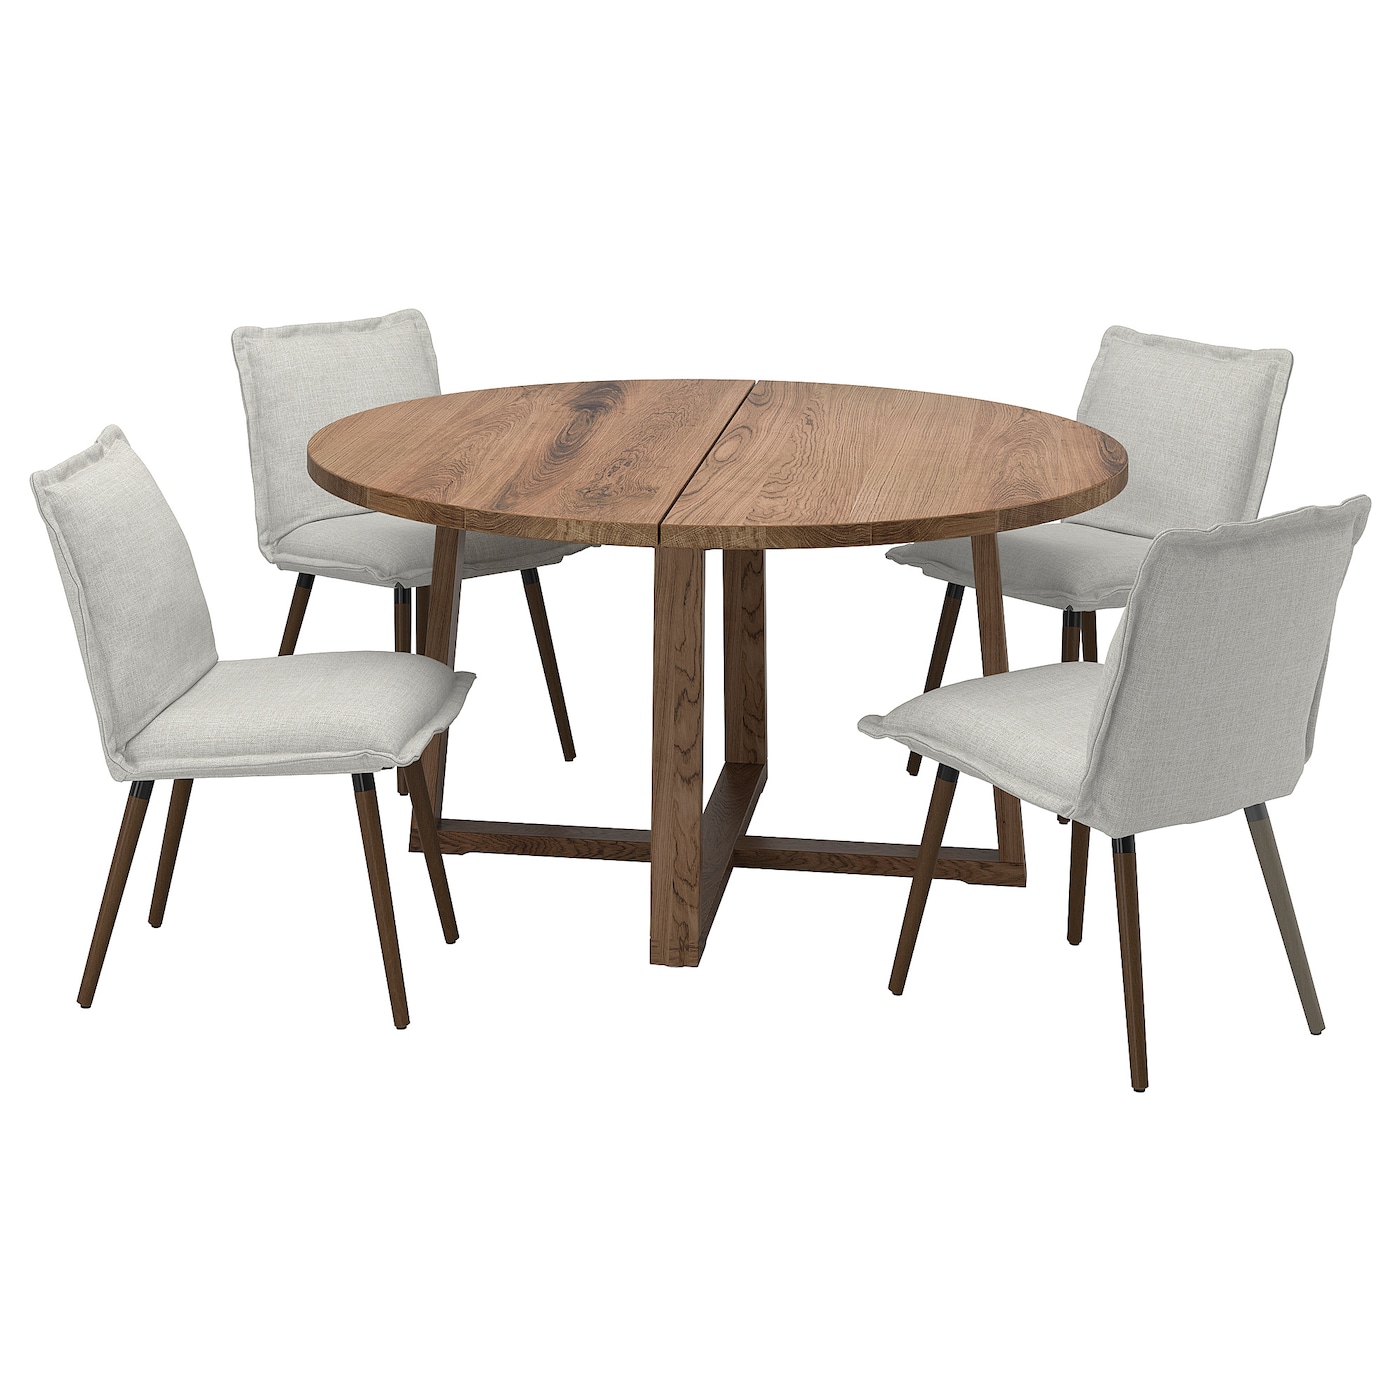 Стол и 4 стула - MÖRBYLÅNGA / KLINTEN/ MОRBYLАNGA IKEA/  МЁРБИЛОНГА / КЛИНТЕН ИКЕА,  145х75/ 81 см,  коричневый/ серый